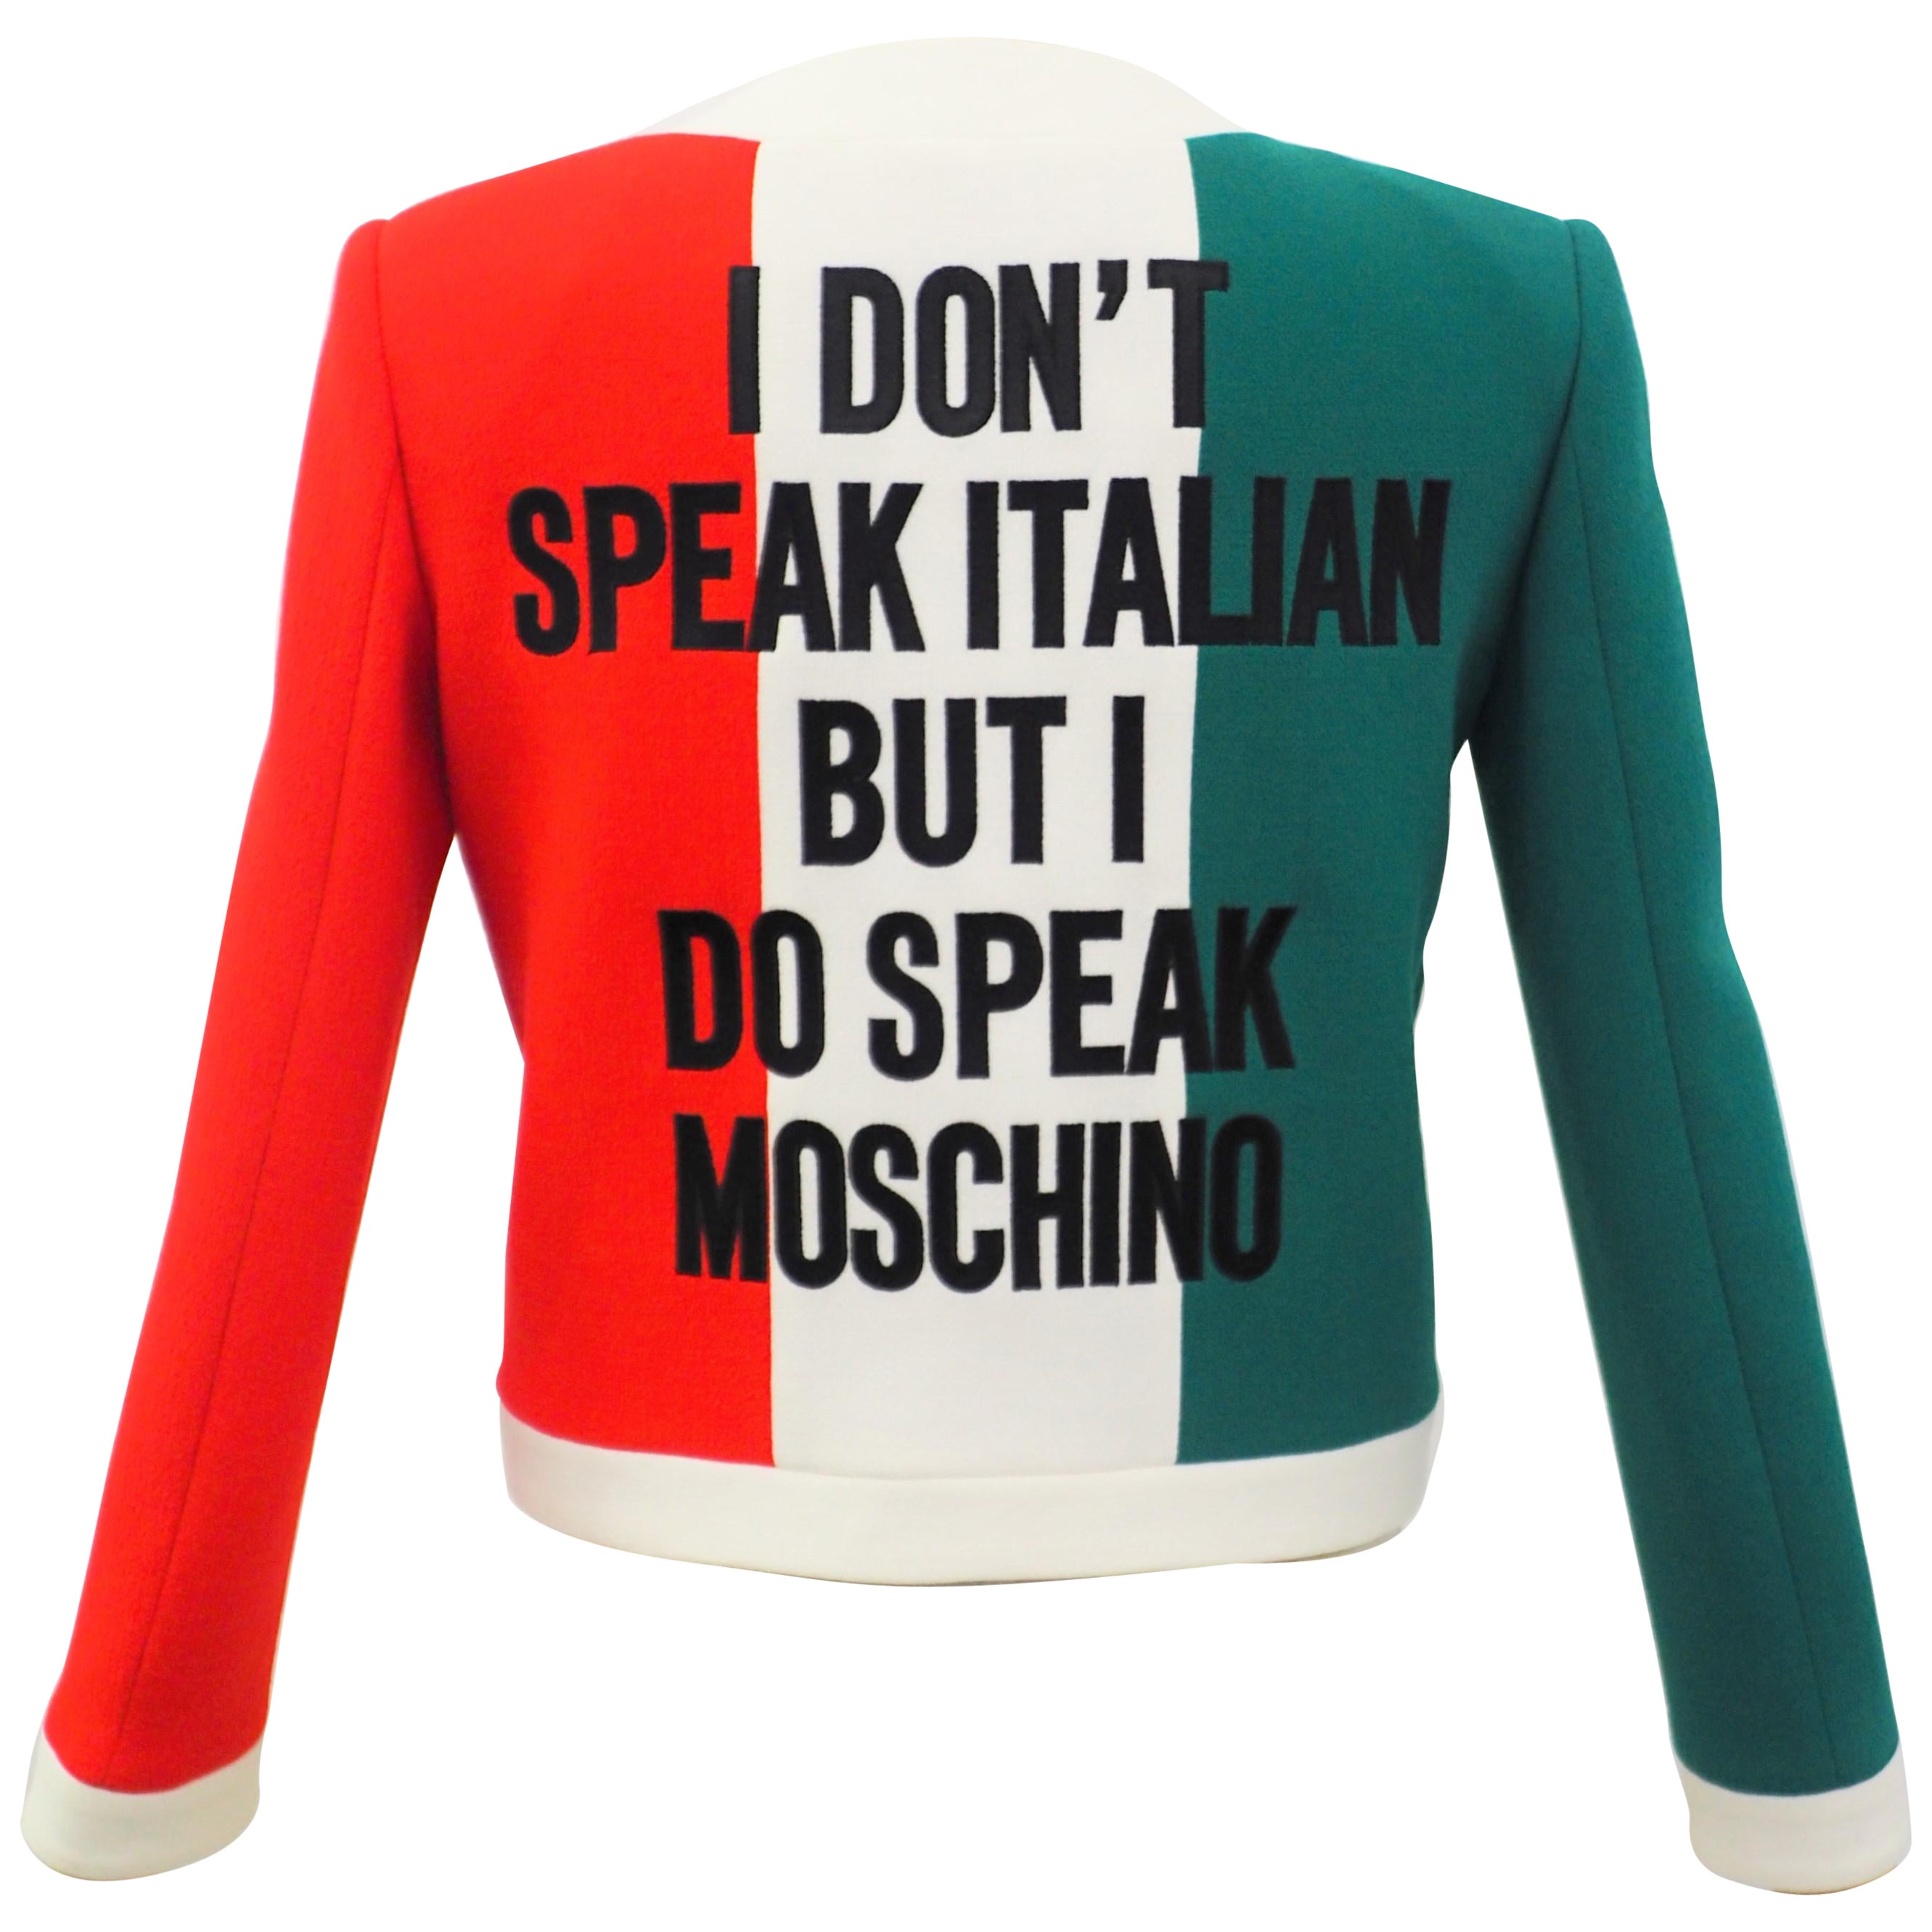 Moschino "I don't speak italian but i do speak Moschino" italian flag jacket NWT For Sale